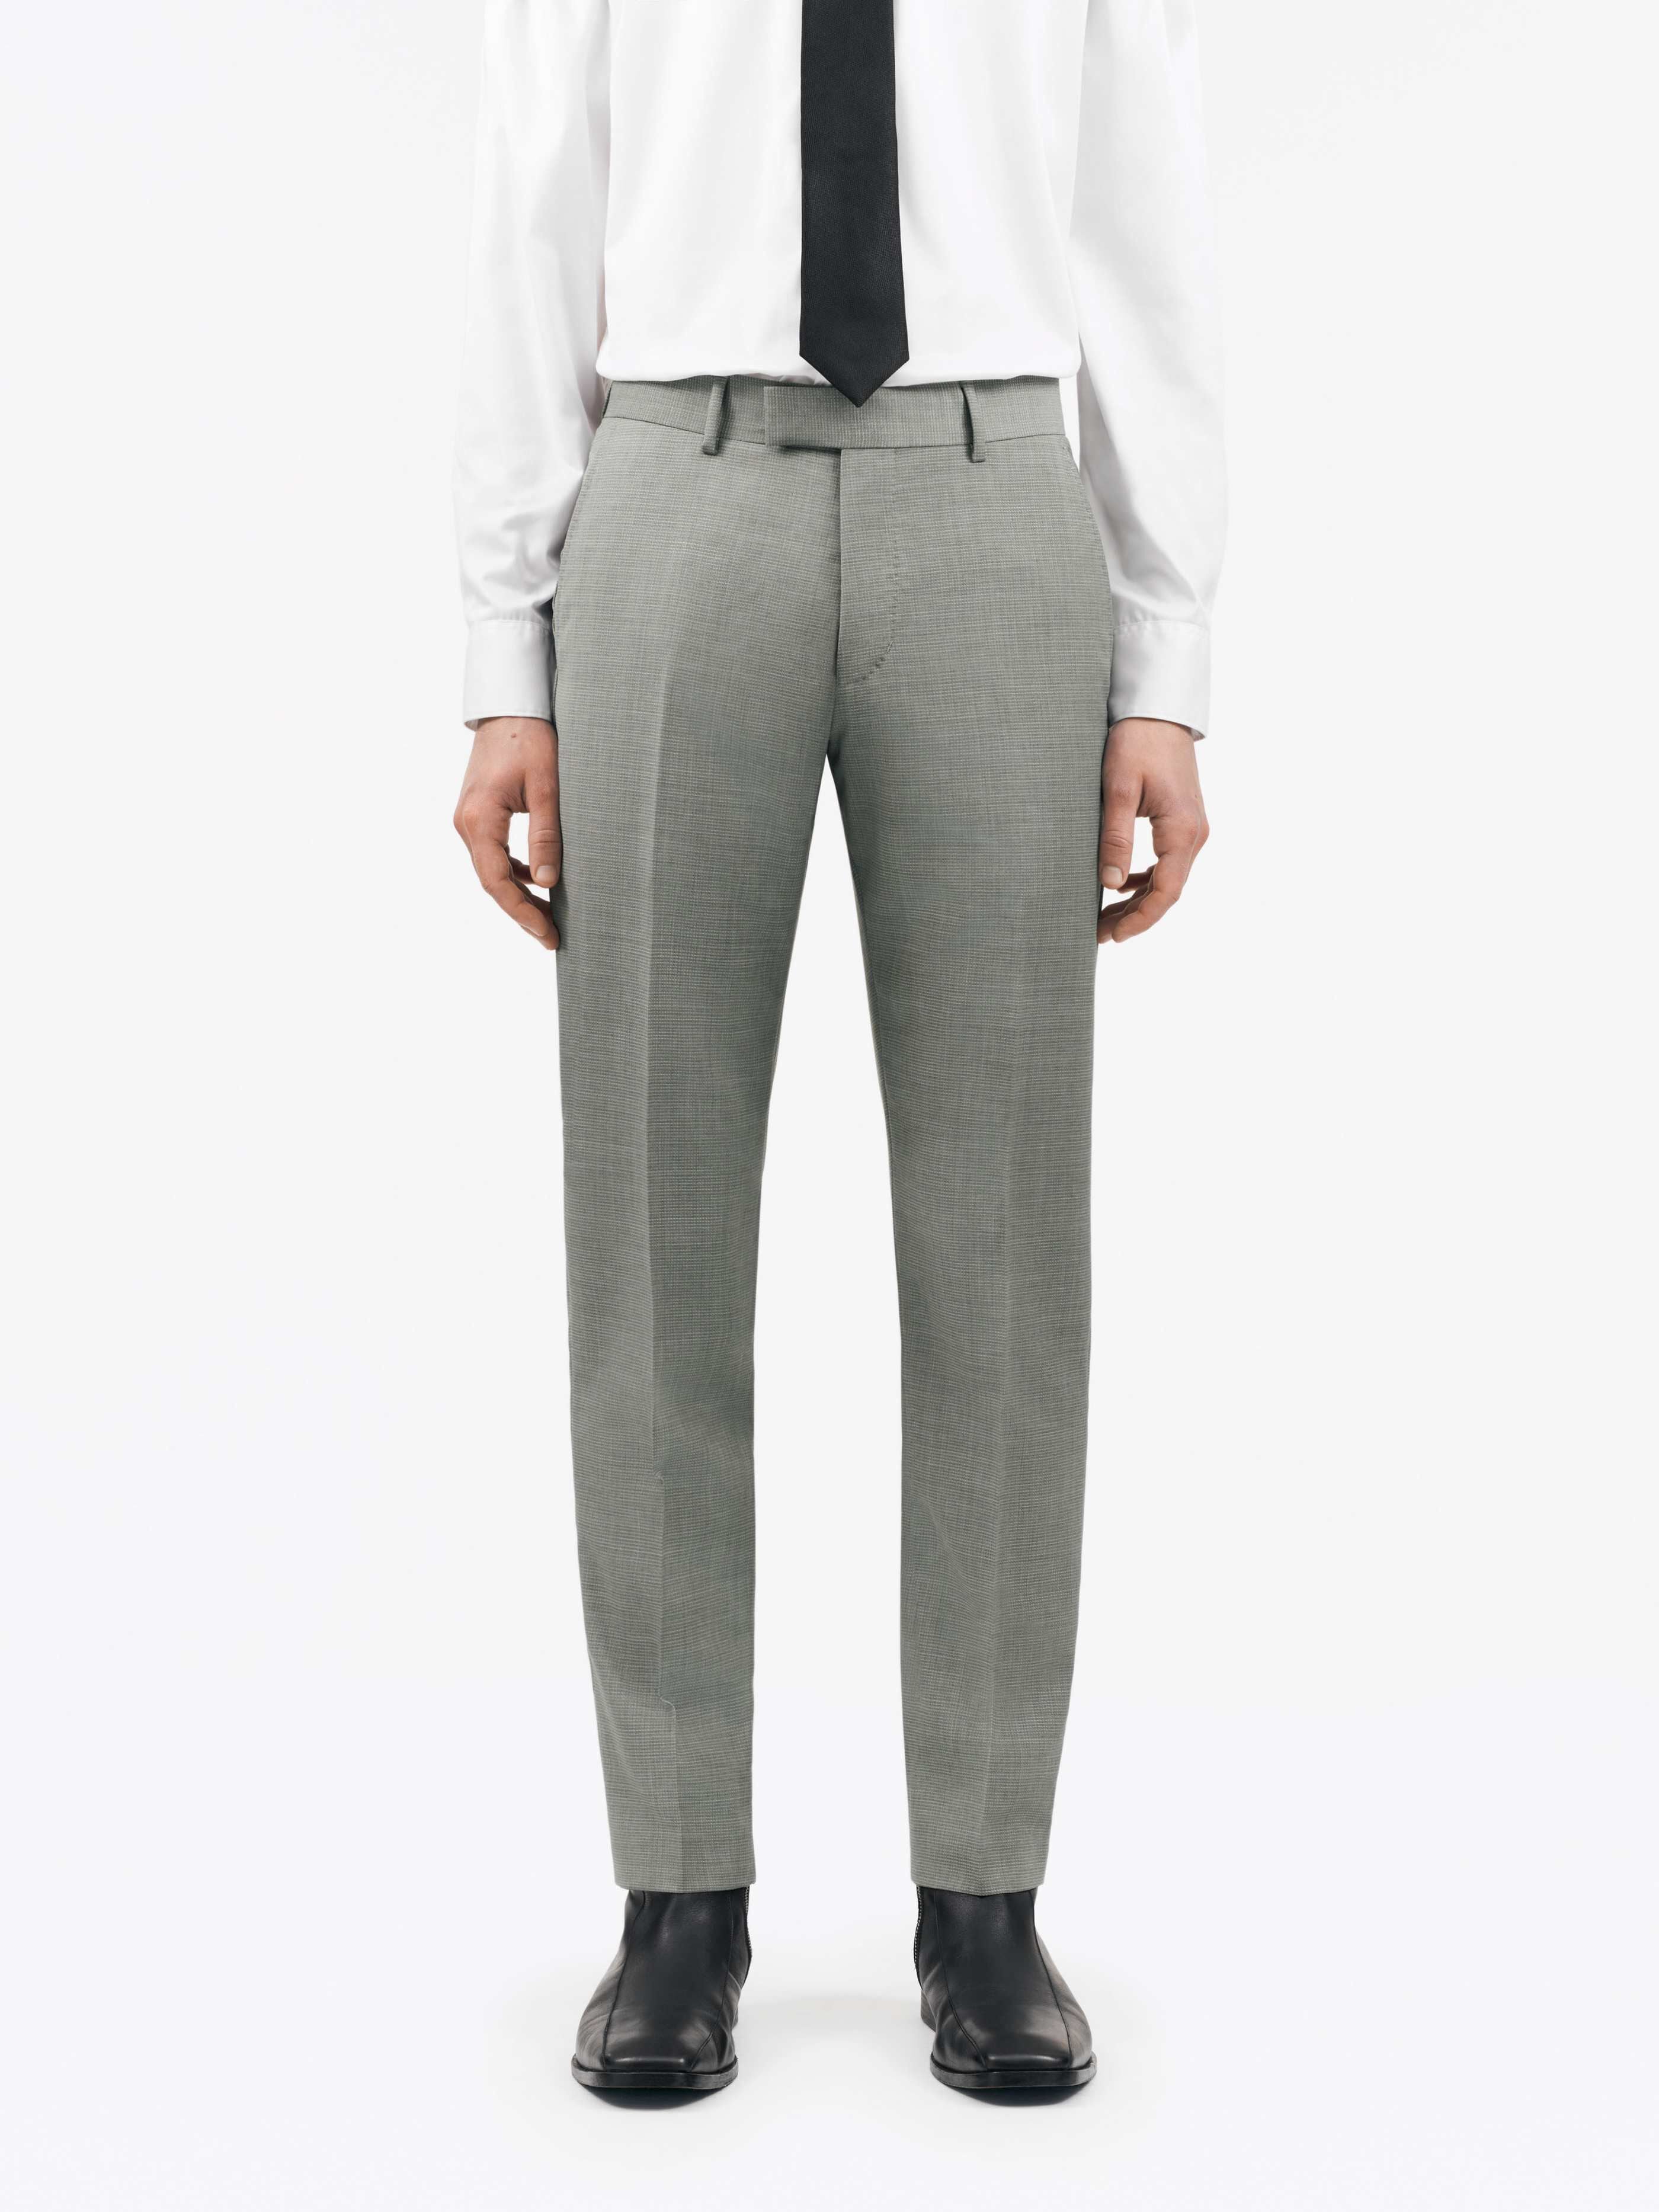 TIGER OF SWEDEN Tenuta Trousers in Light Grey T71616018| eightywingold 